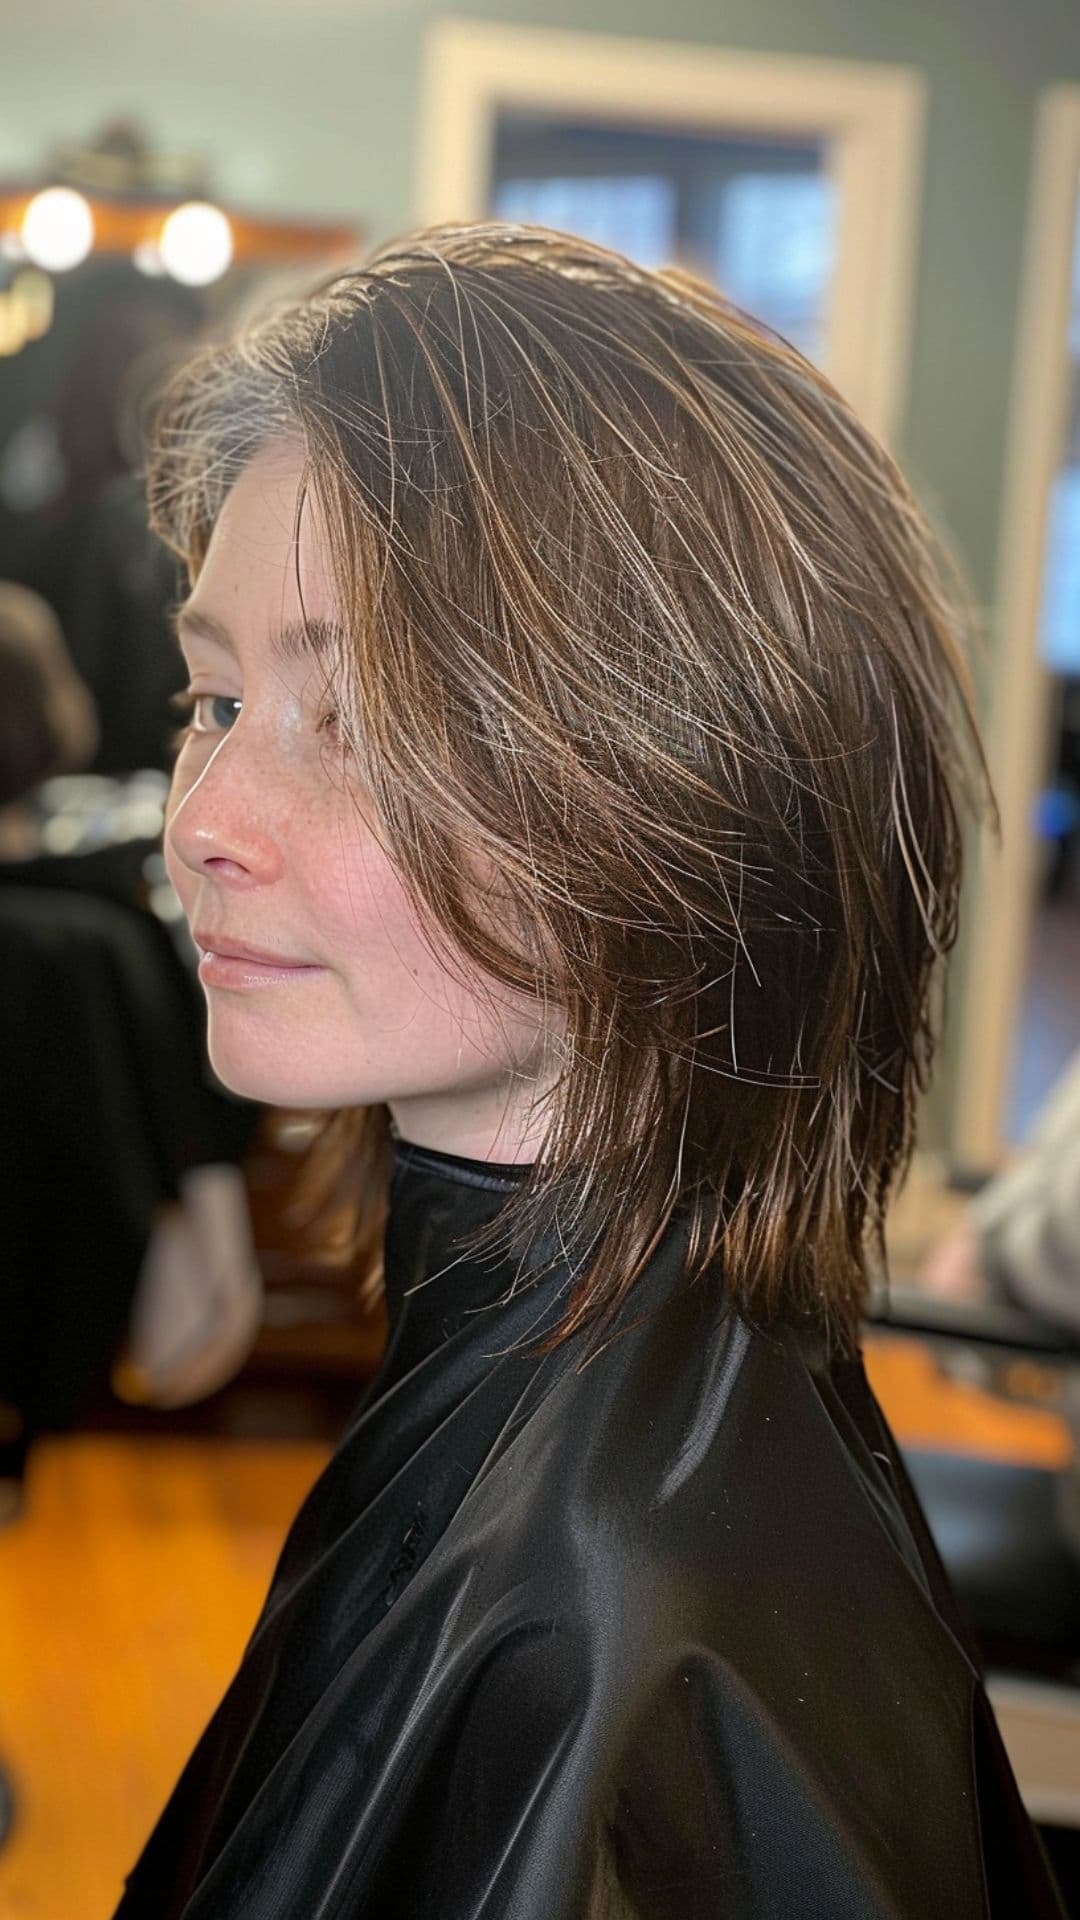 An older woman modelling a choppy layers haircut.